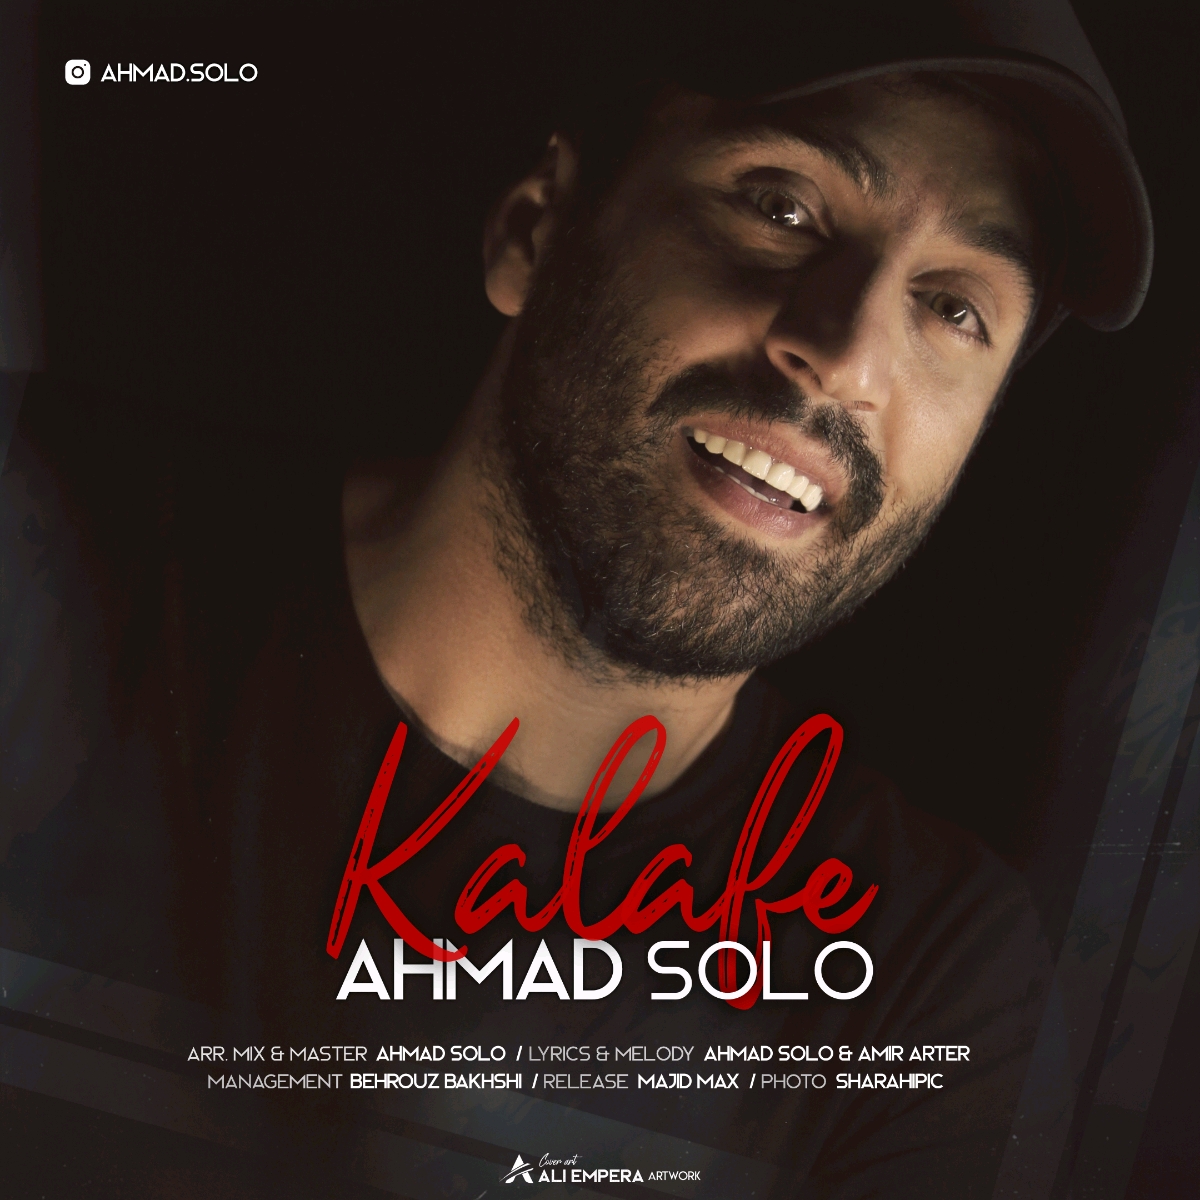  دانلود آهنگ جدید احمد سلو - کلافه | Download New Music By Ahmad Solo - Kalafe